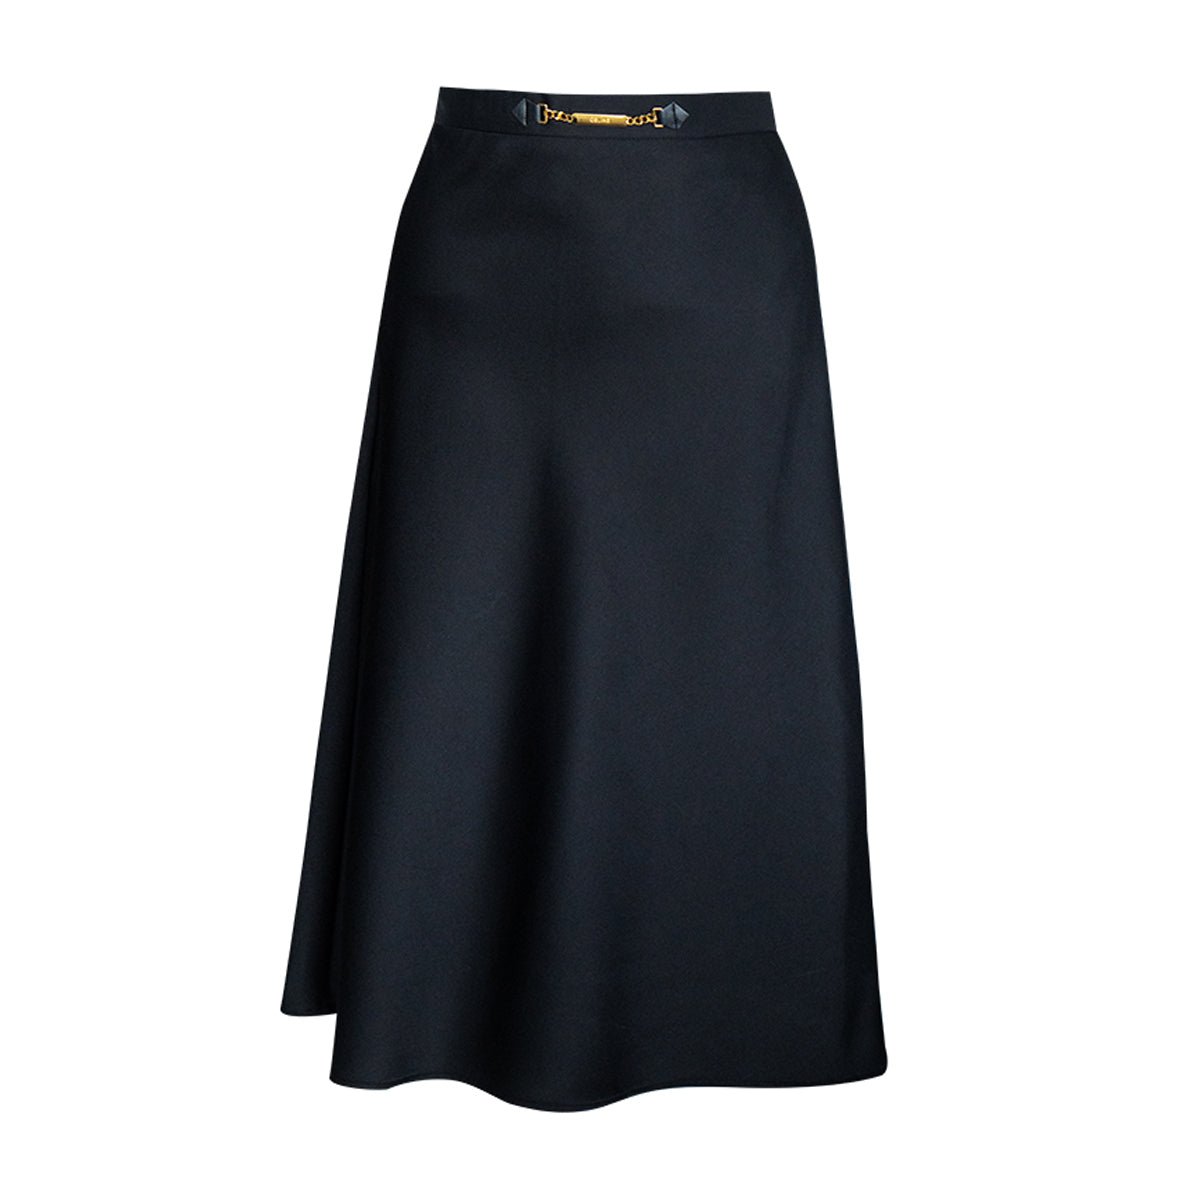 Belted A-Line Black Midi Skirt - 0cm